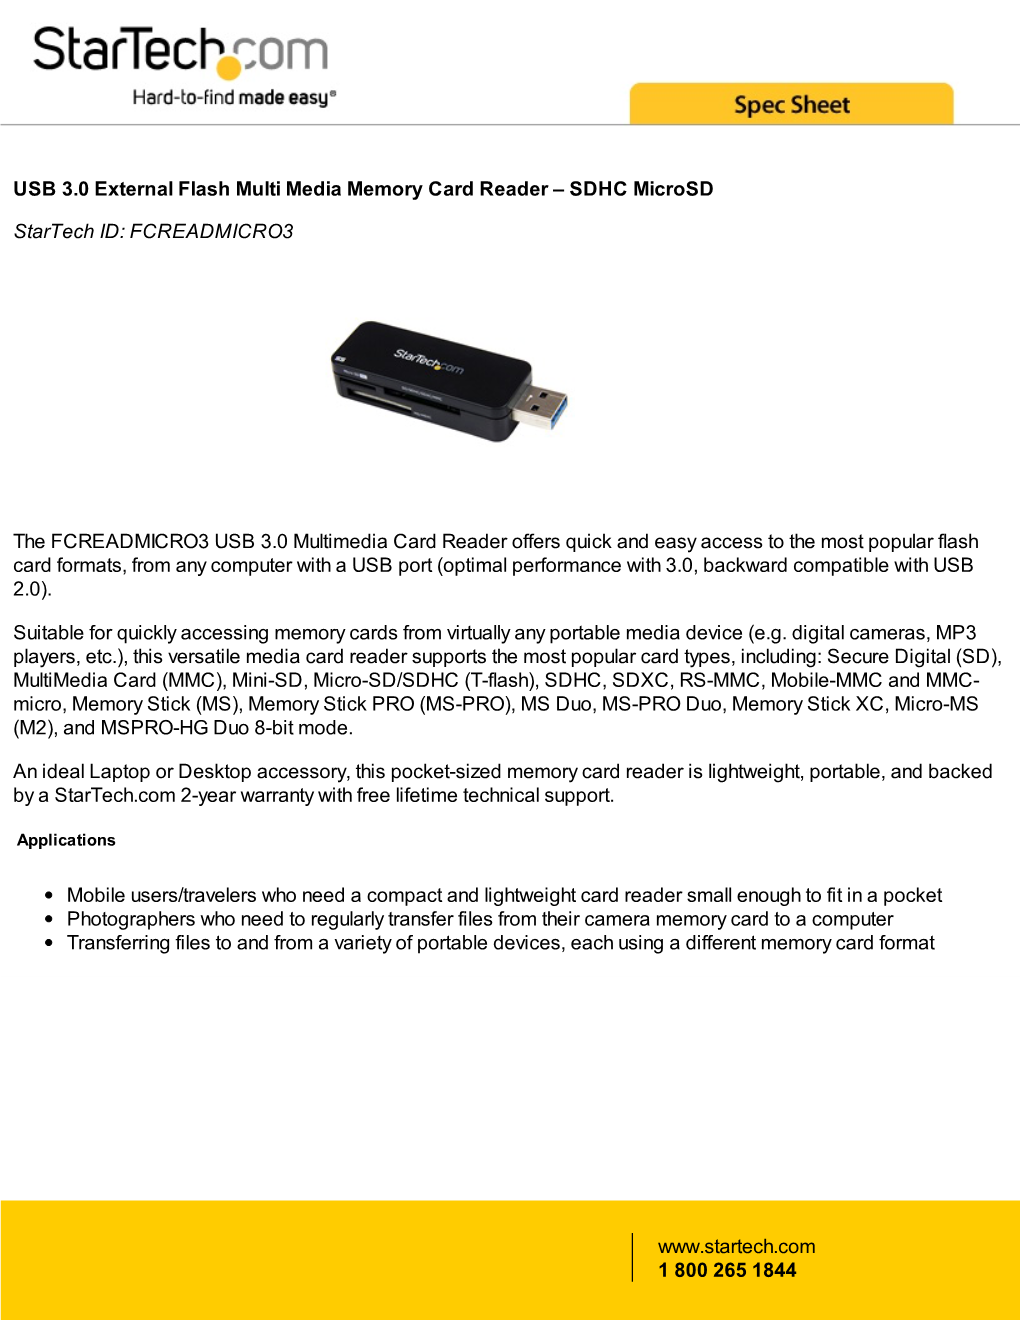 USB 3.0 External Flash Multi Media Memory Card Reader – SDHC Microsd